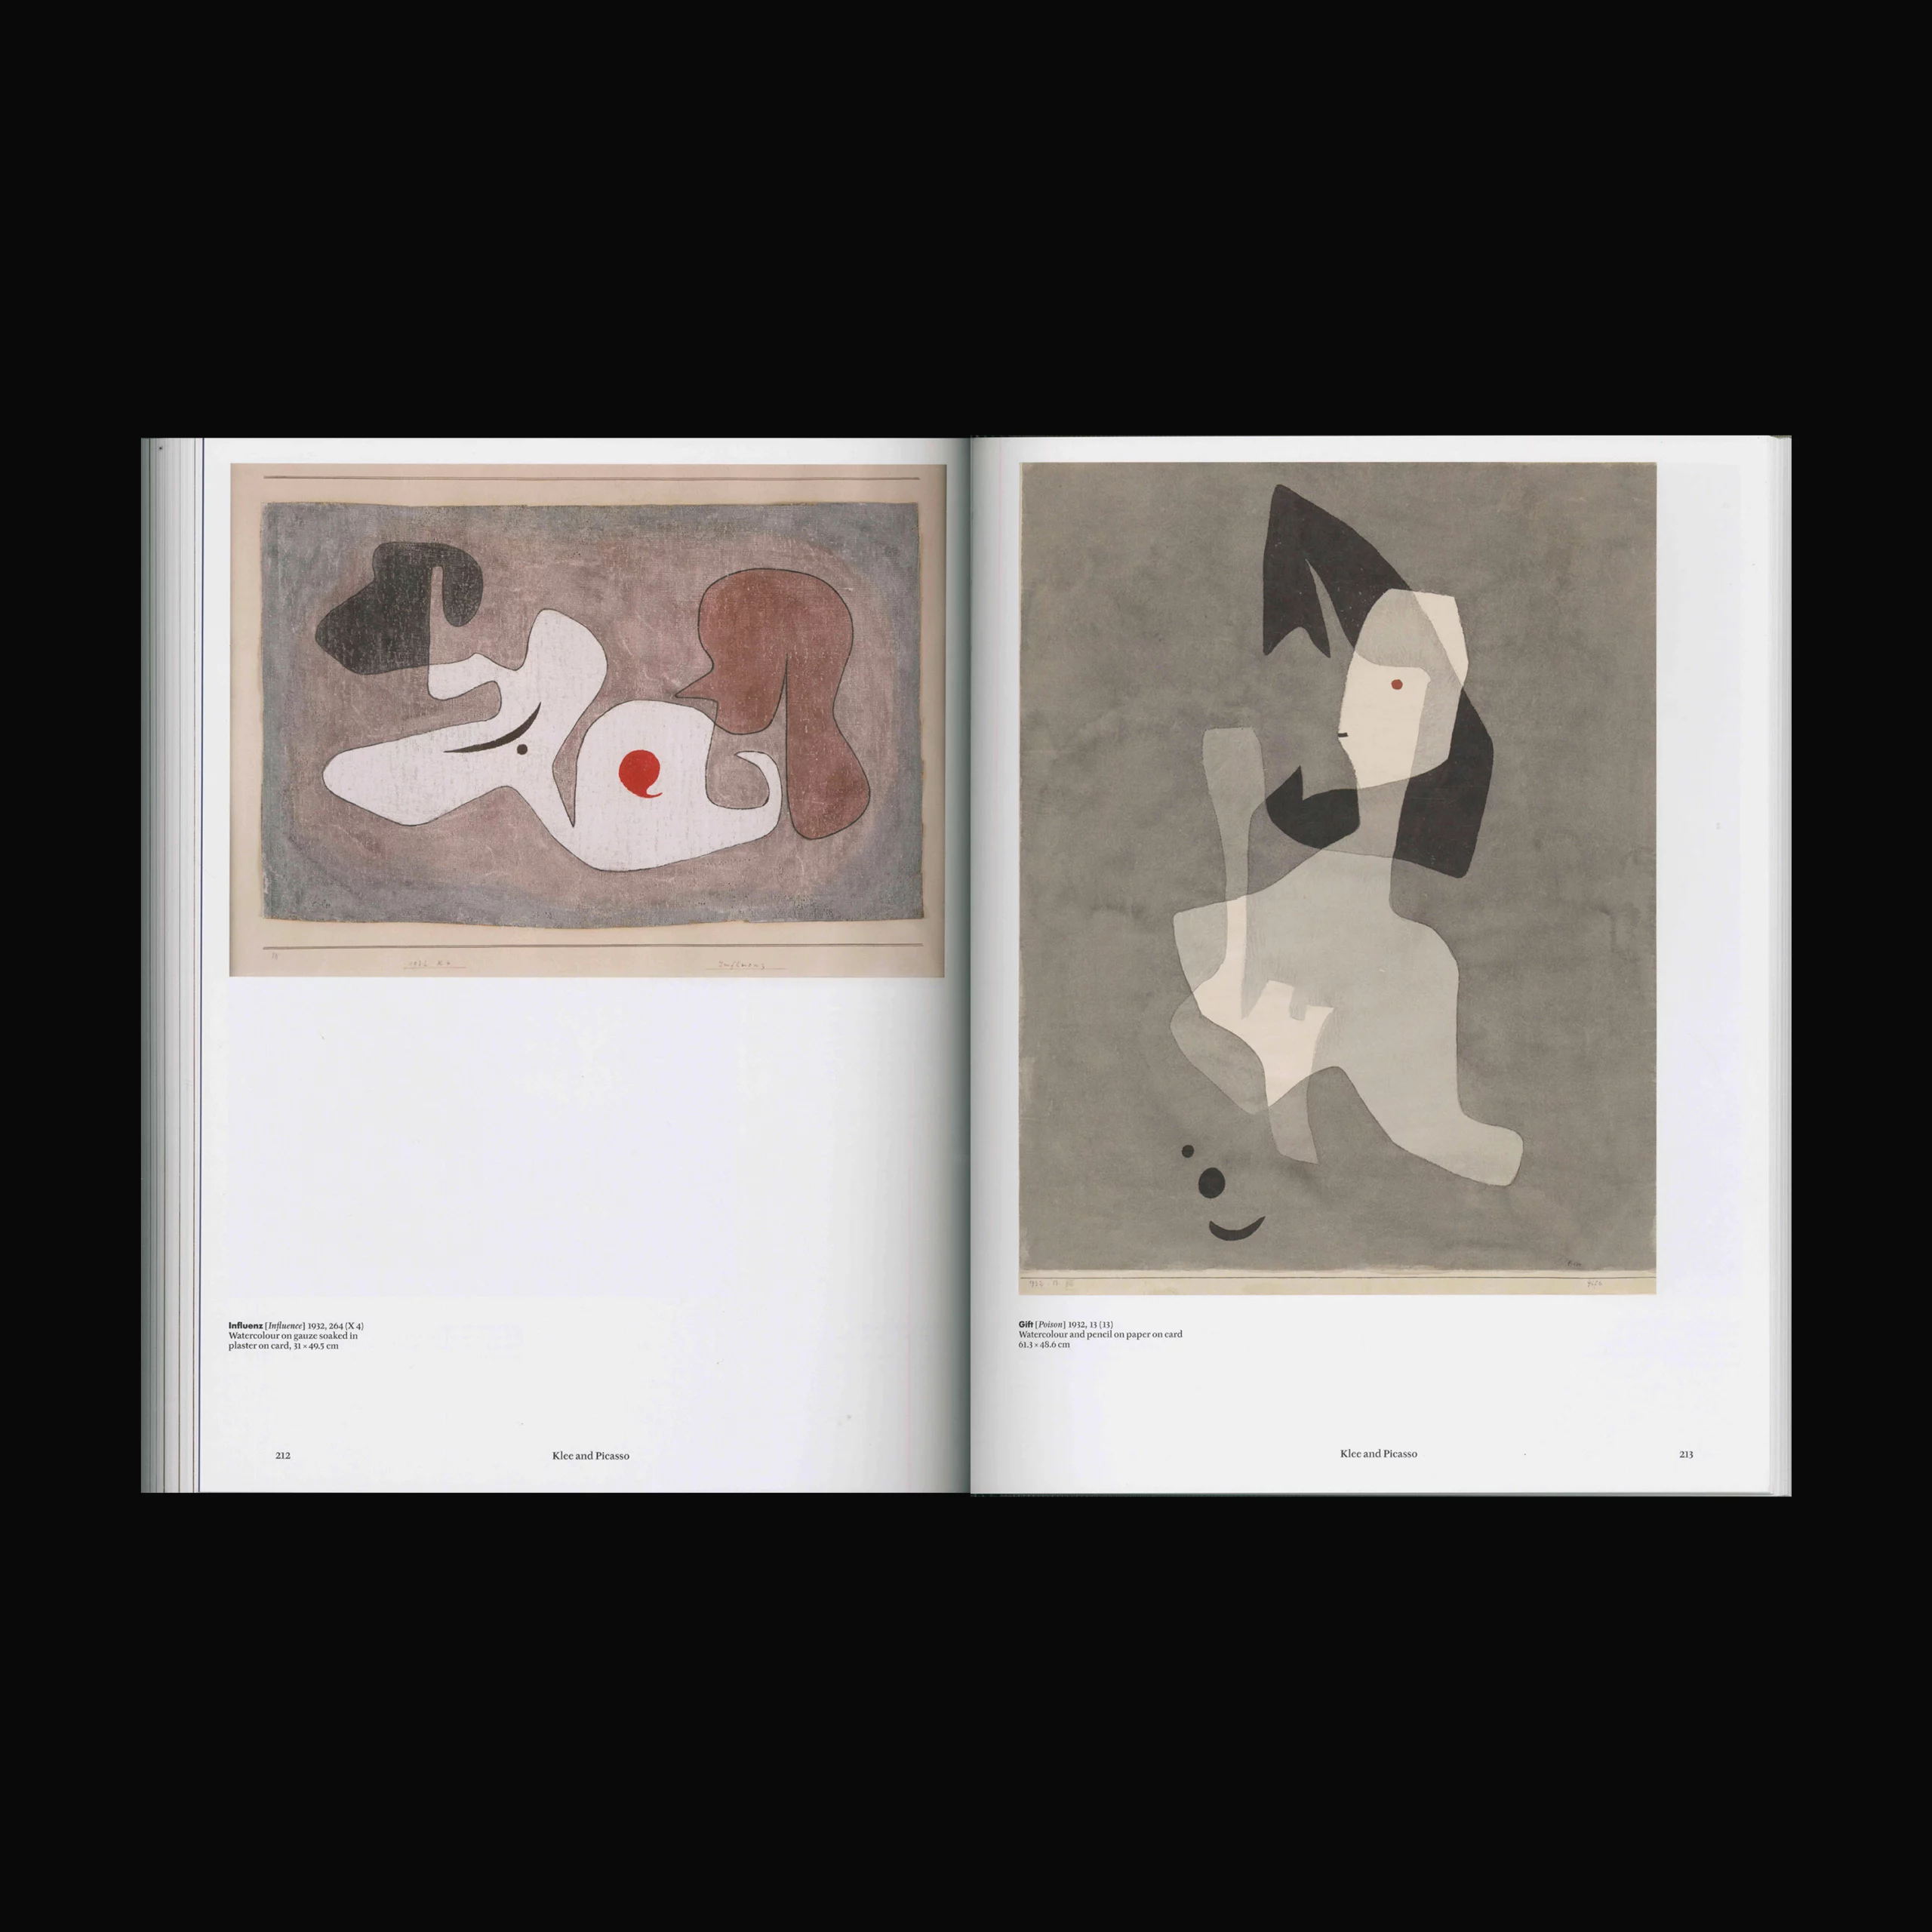 Paul Klee: Irony at Work, Angela Lampe, 2016